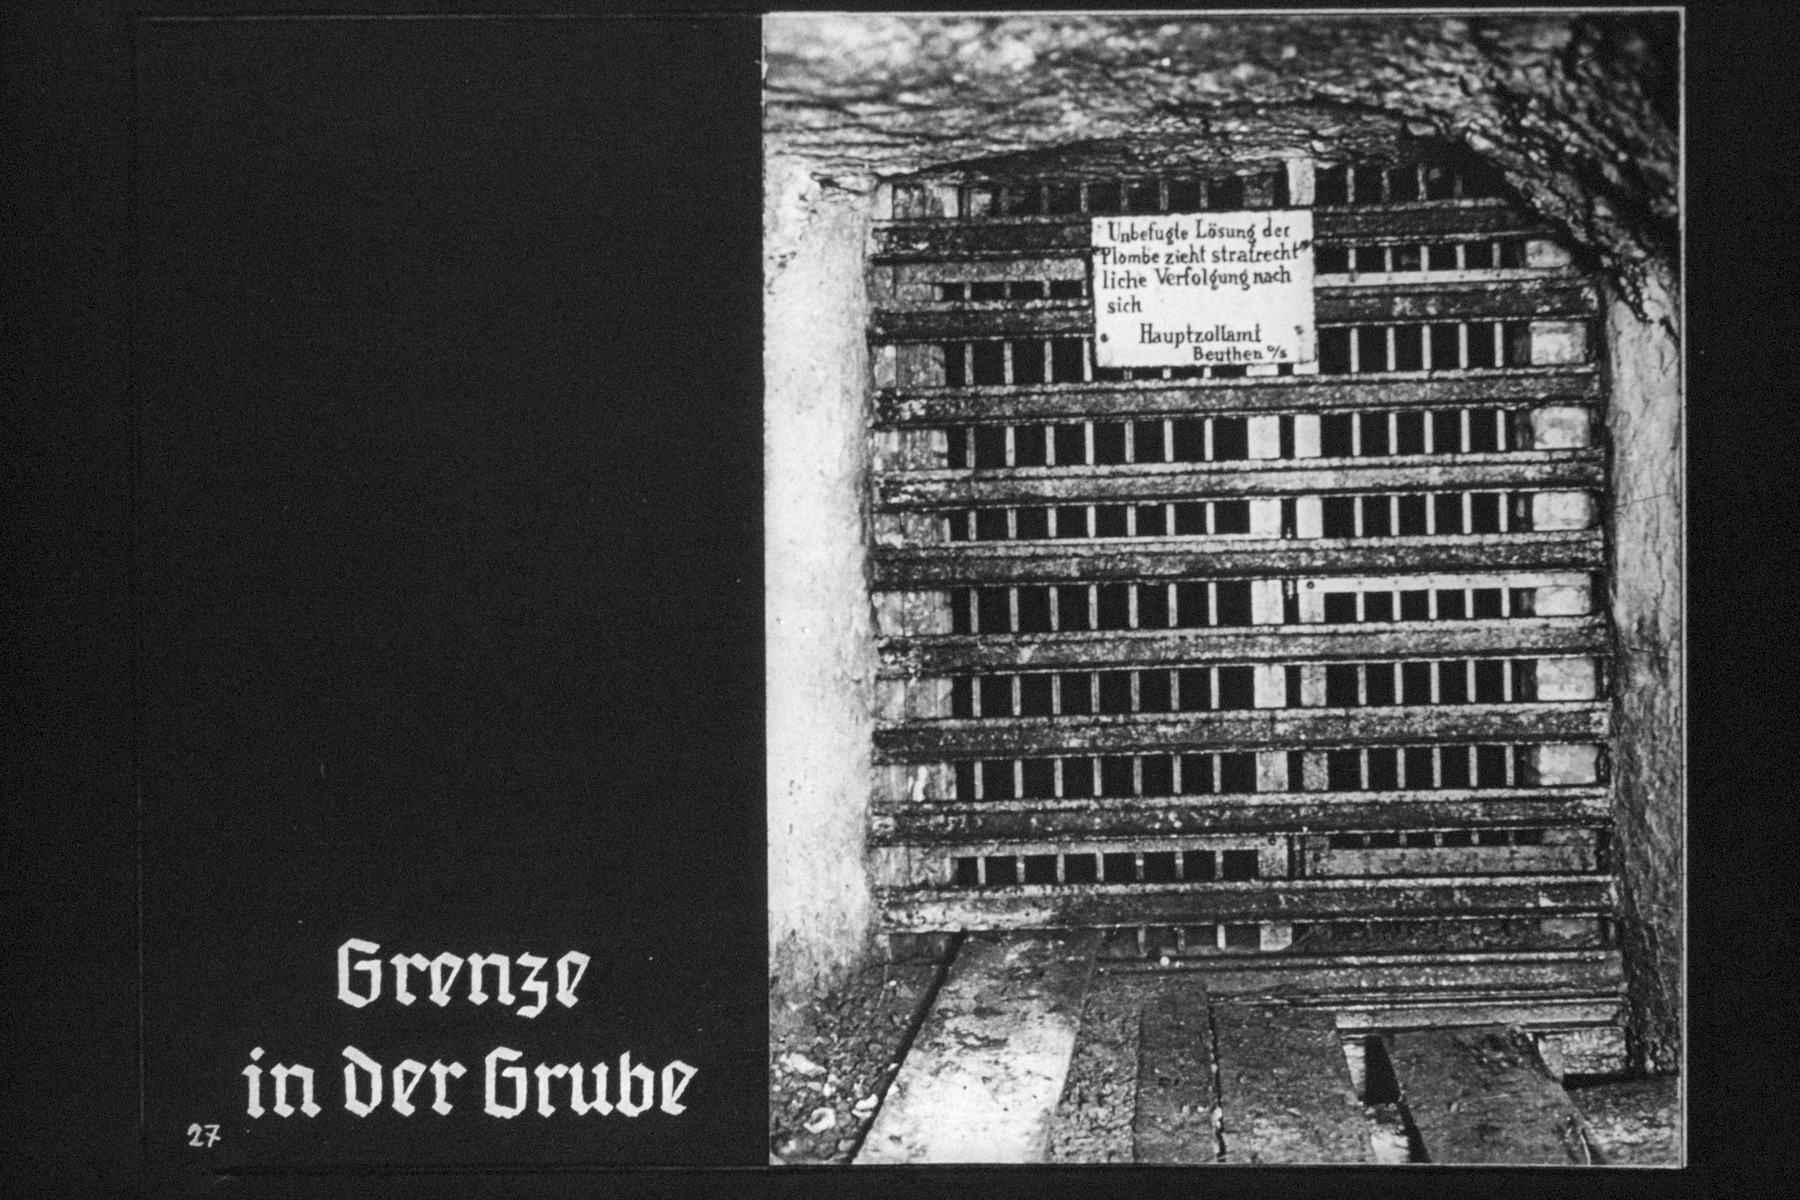 28th Nazi propaganda slide from Hitler Youth educational material titled "Border Land Upper Silesia."

Grenze in der Grube
//
Border inside the mine